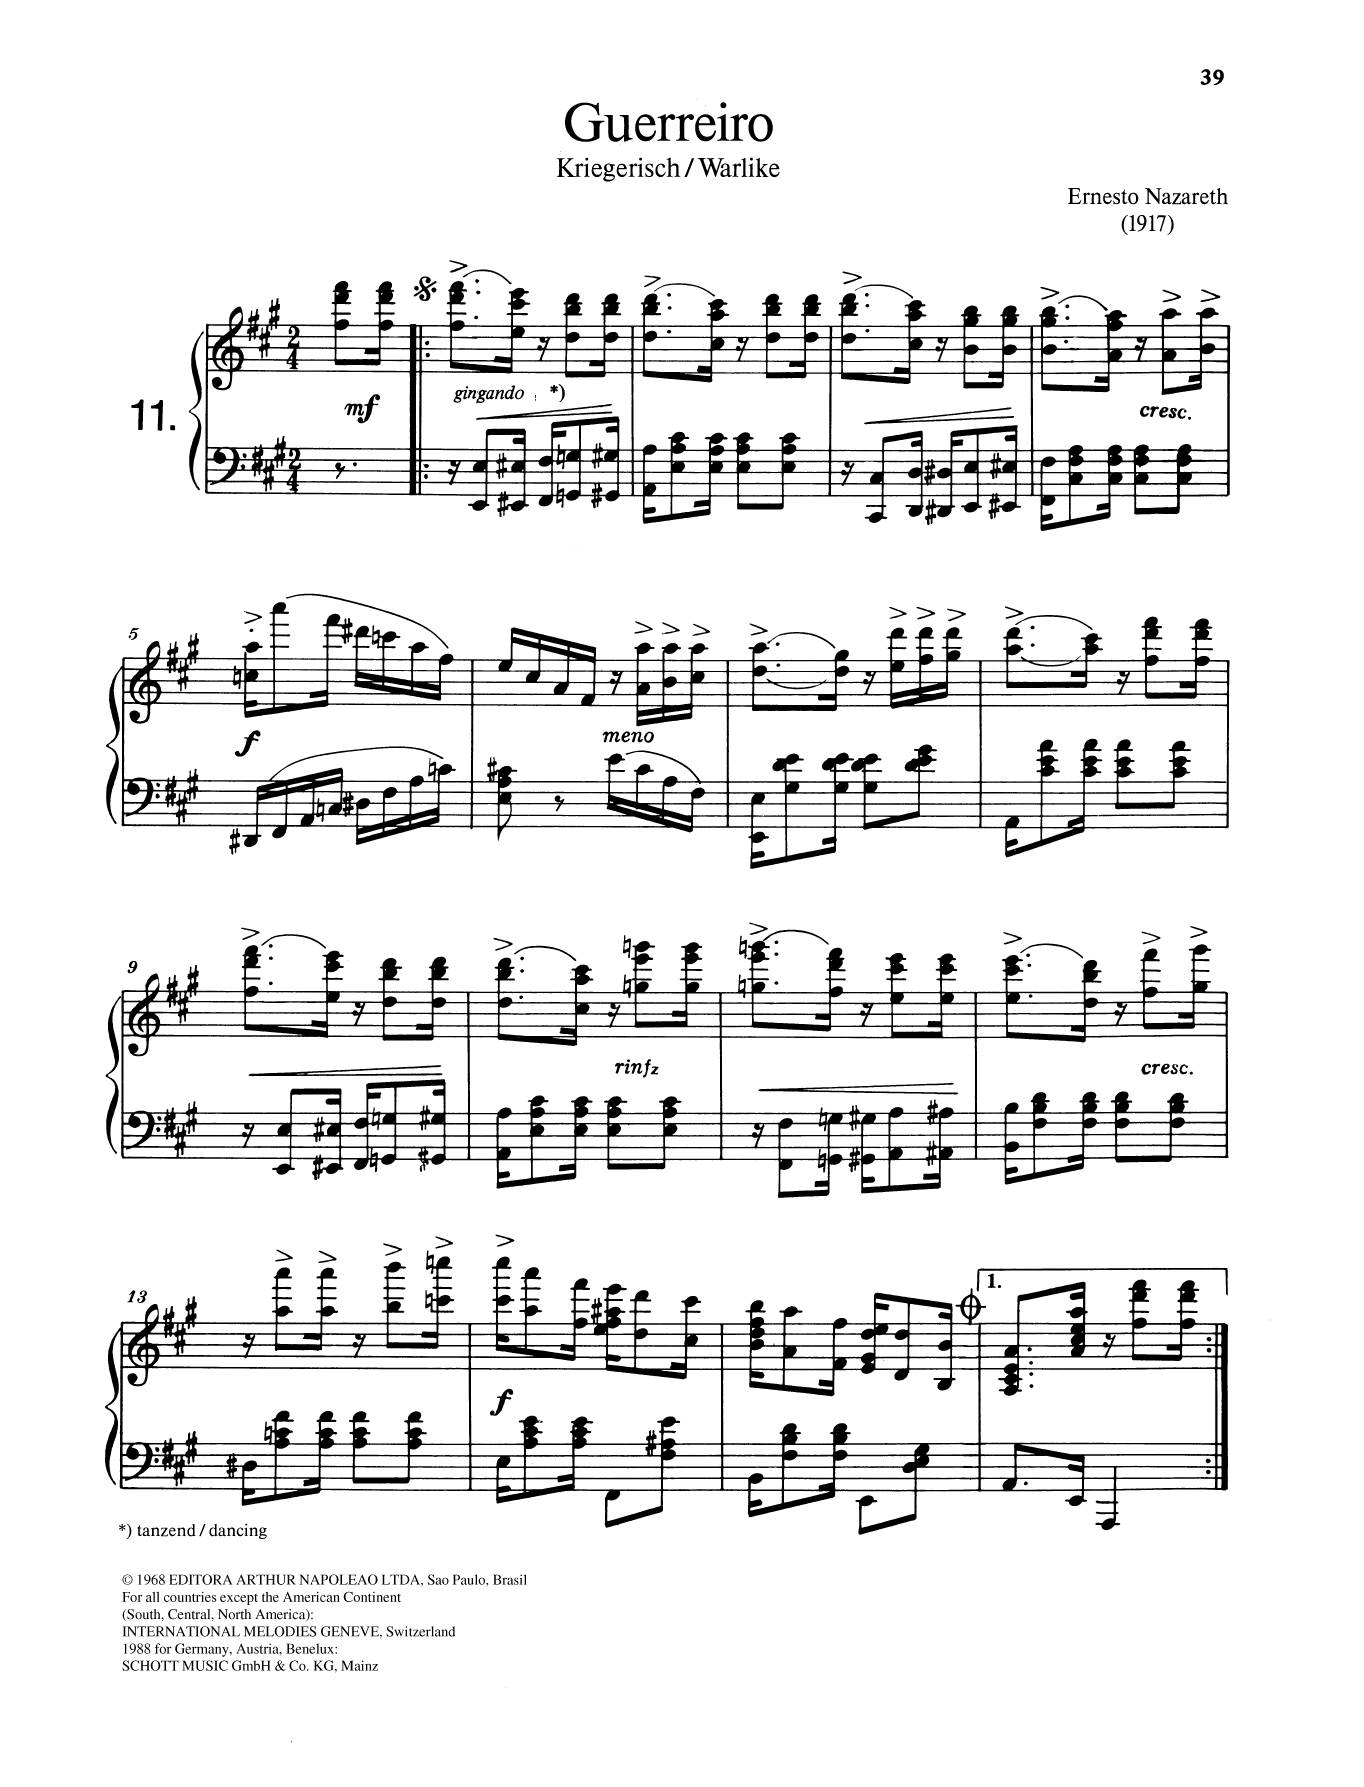 Ernesto Nazareth Gurreiro Sheet Music Notes & Chords for Piano Solo - Download or Print PDF